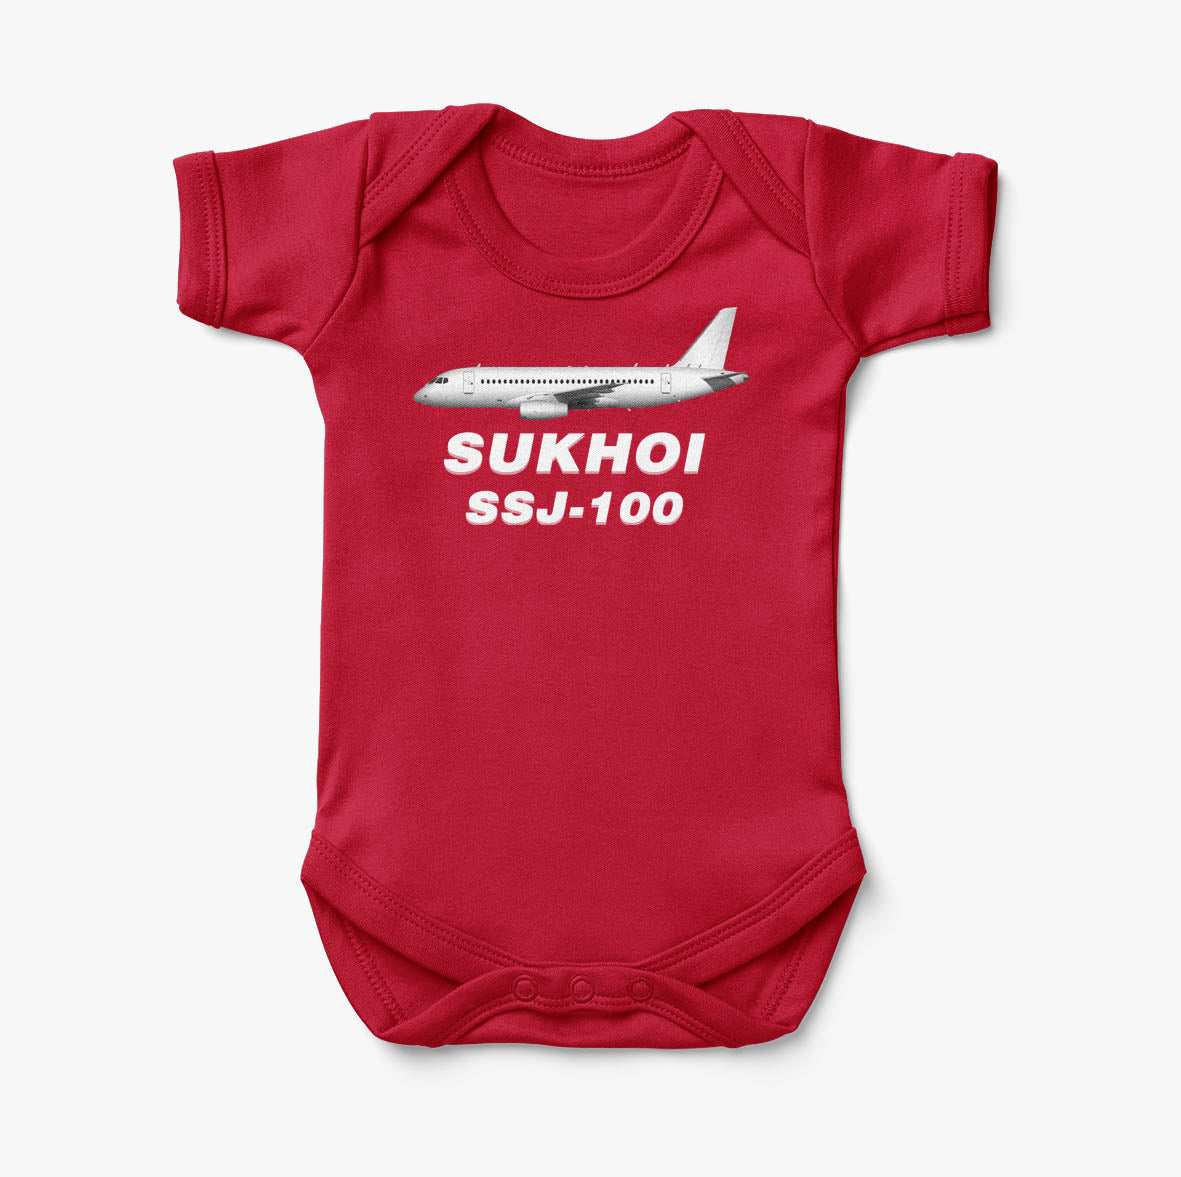 The Sukhoi Superjet 100 Designed Baby Bodysuits